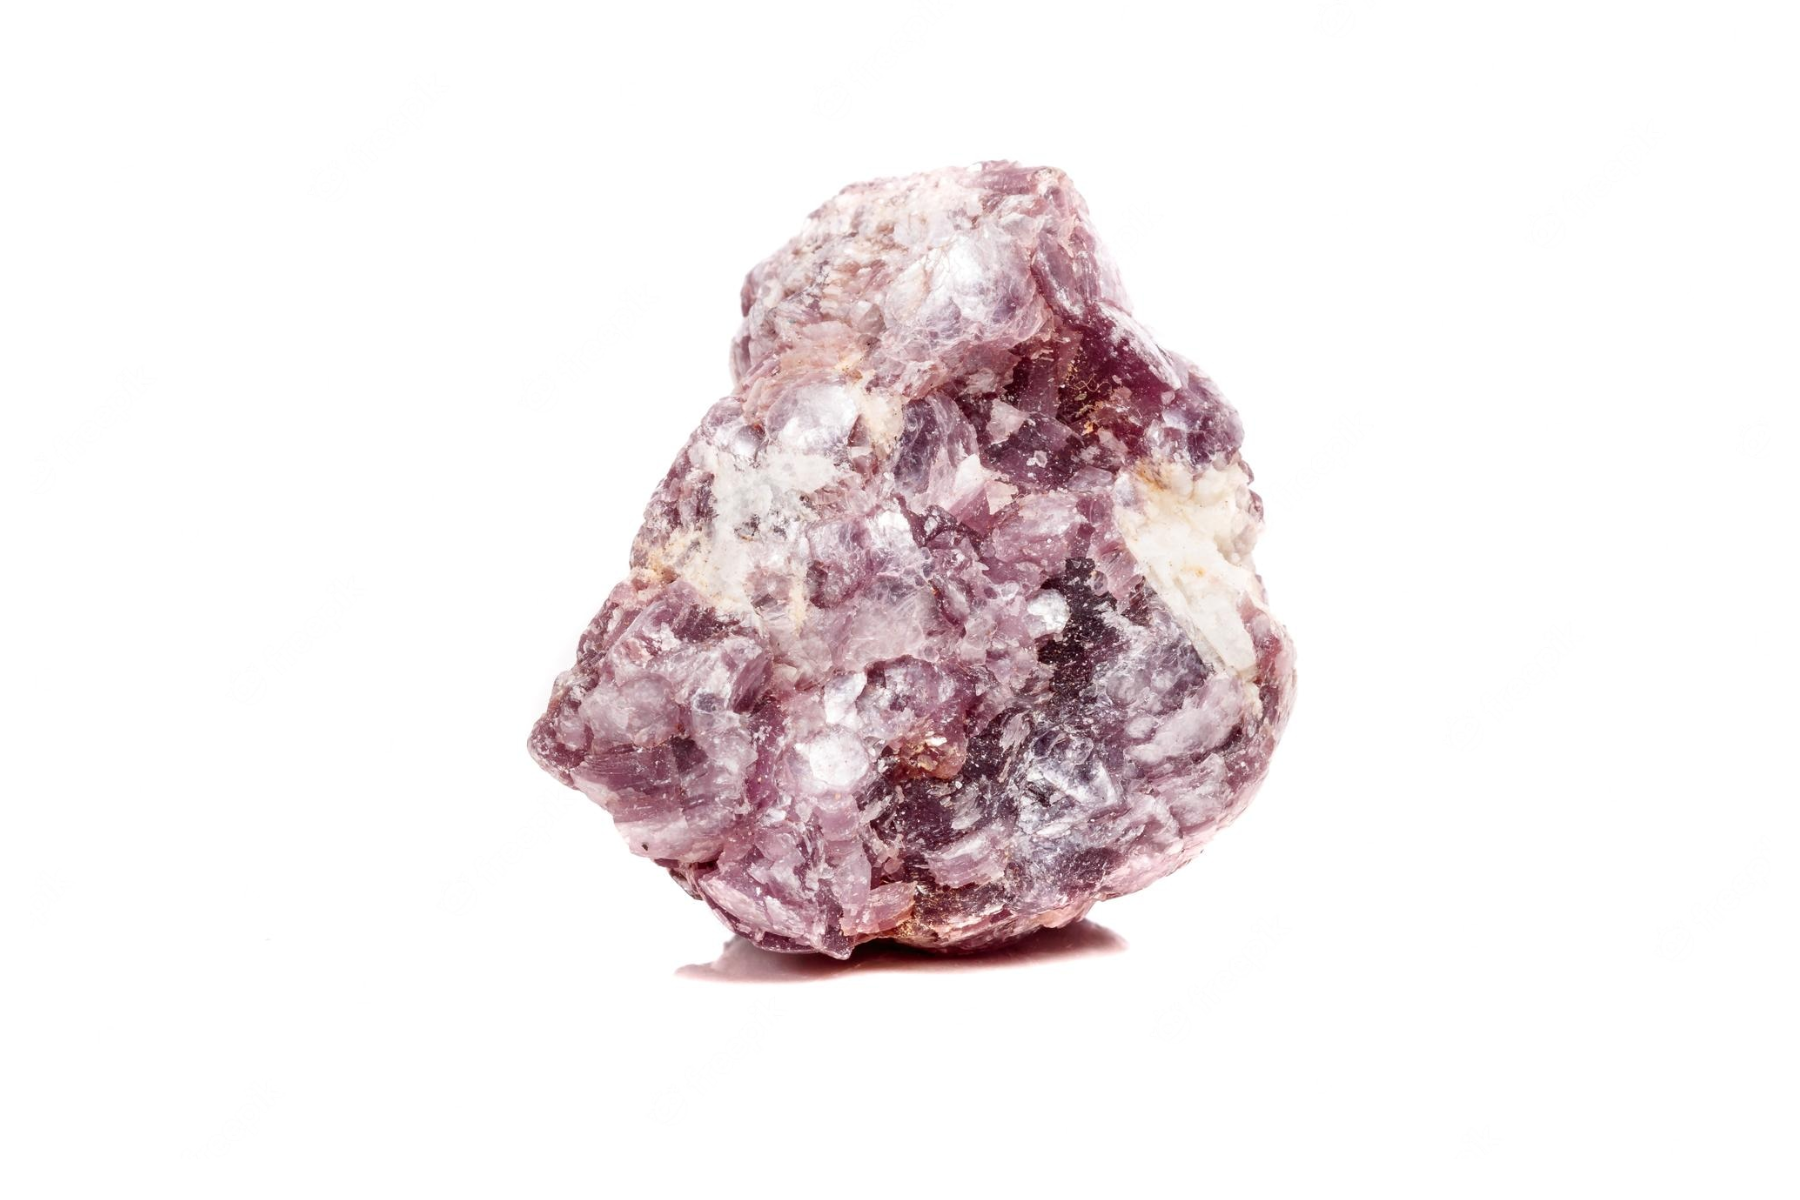 A crystal of white-violet lepidolite